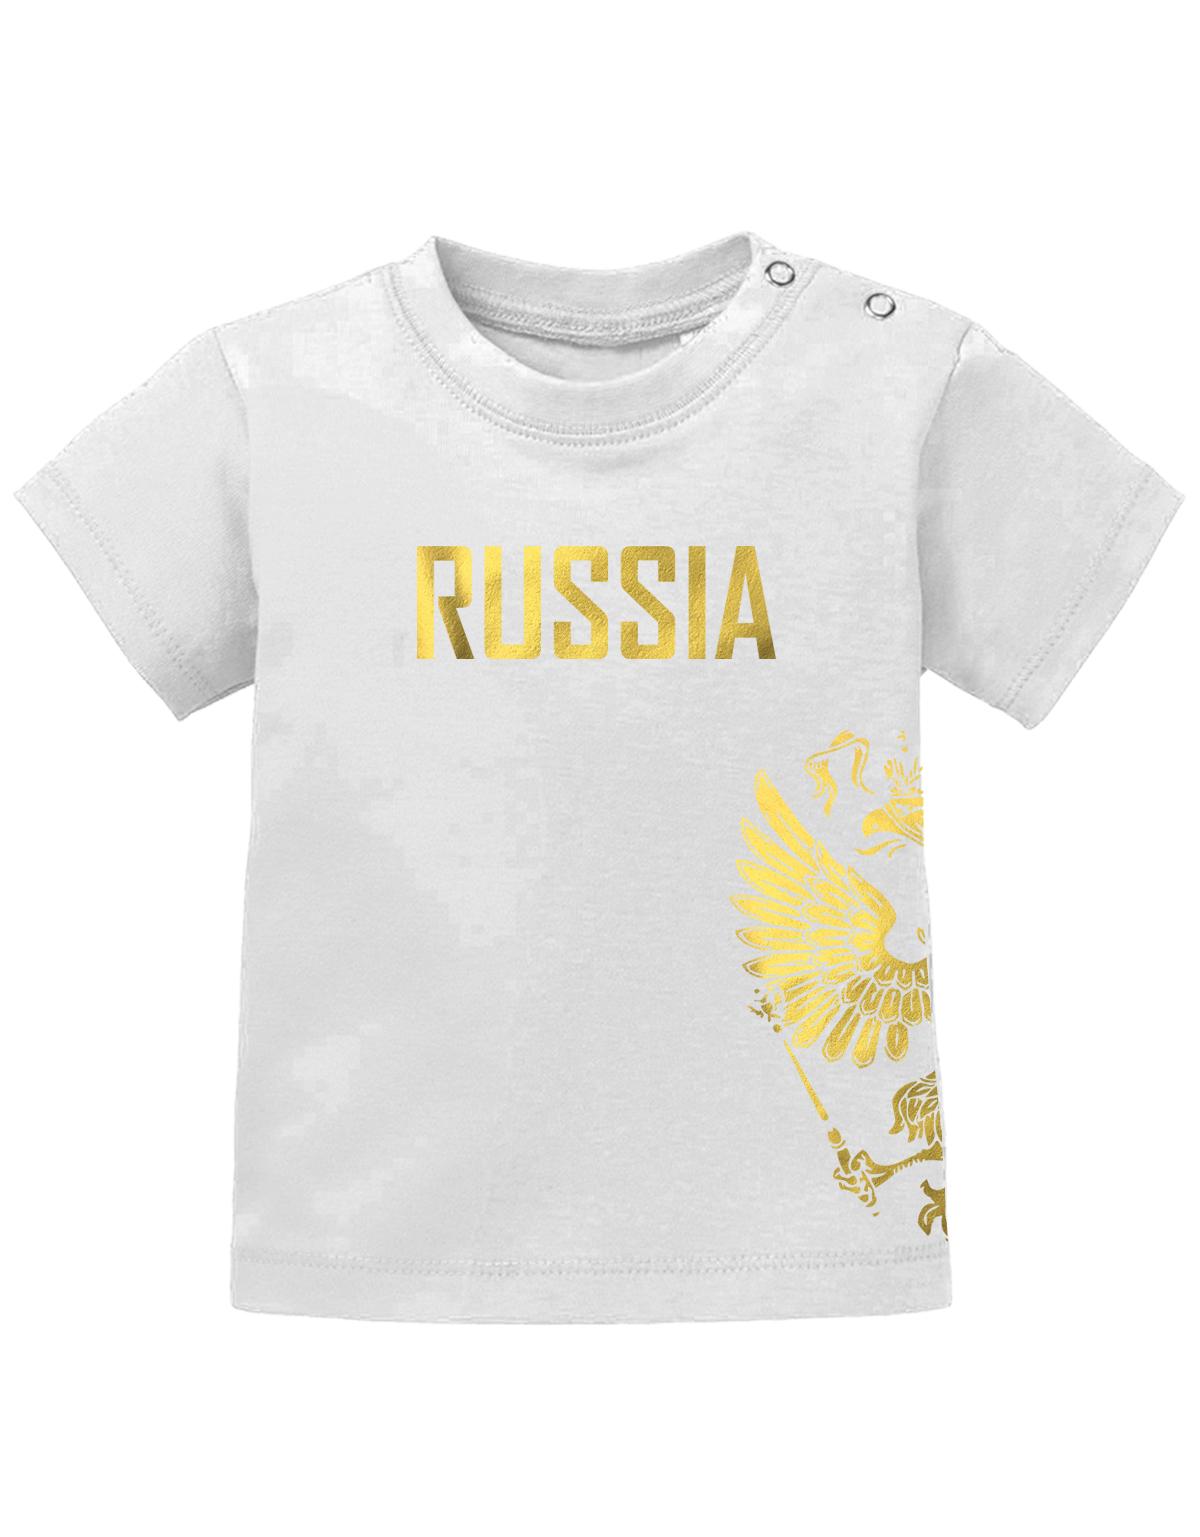 Russia-adler-Baby-weiss